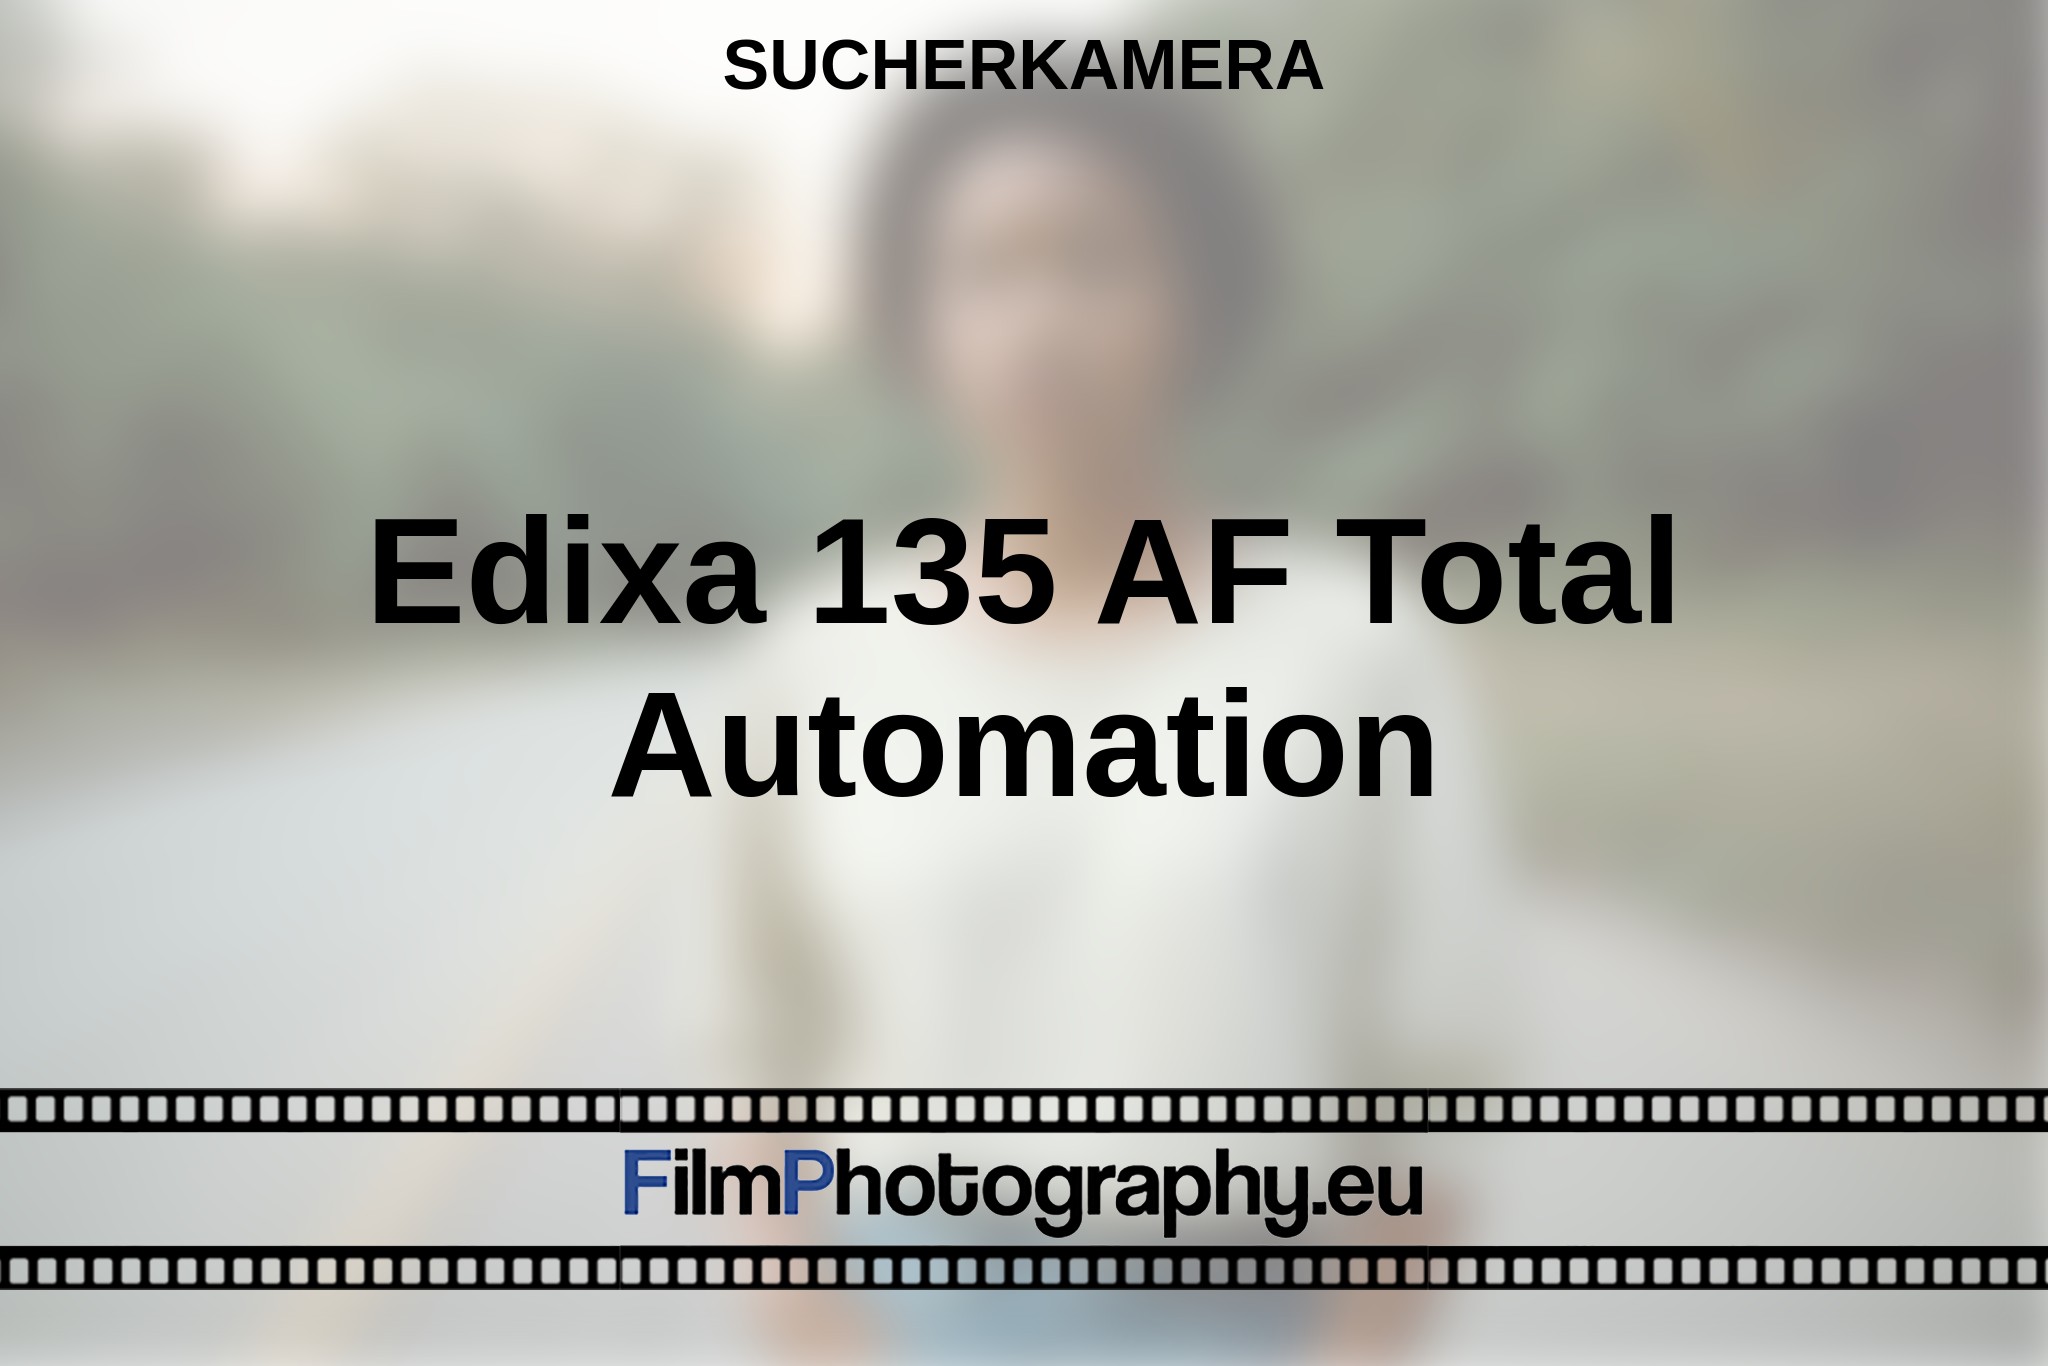 edixa-135-af-total-automation-sucherkamera-bnv.jpg